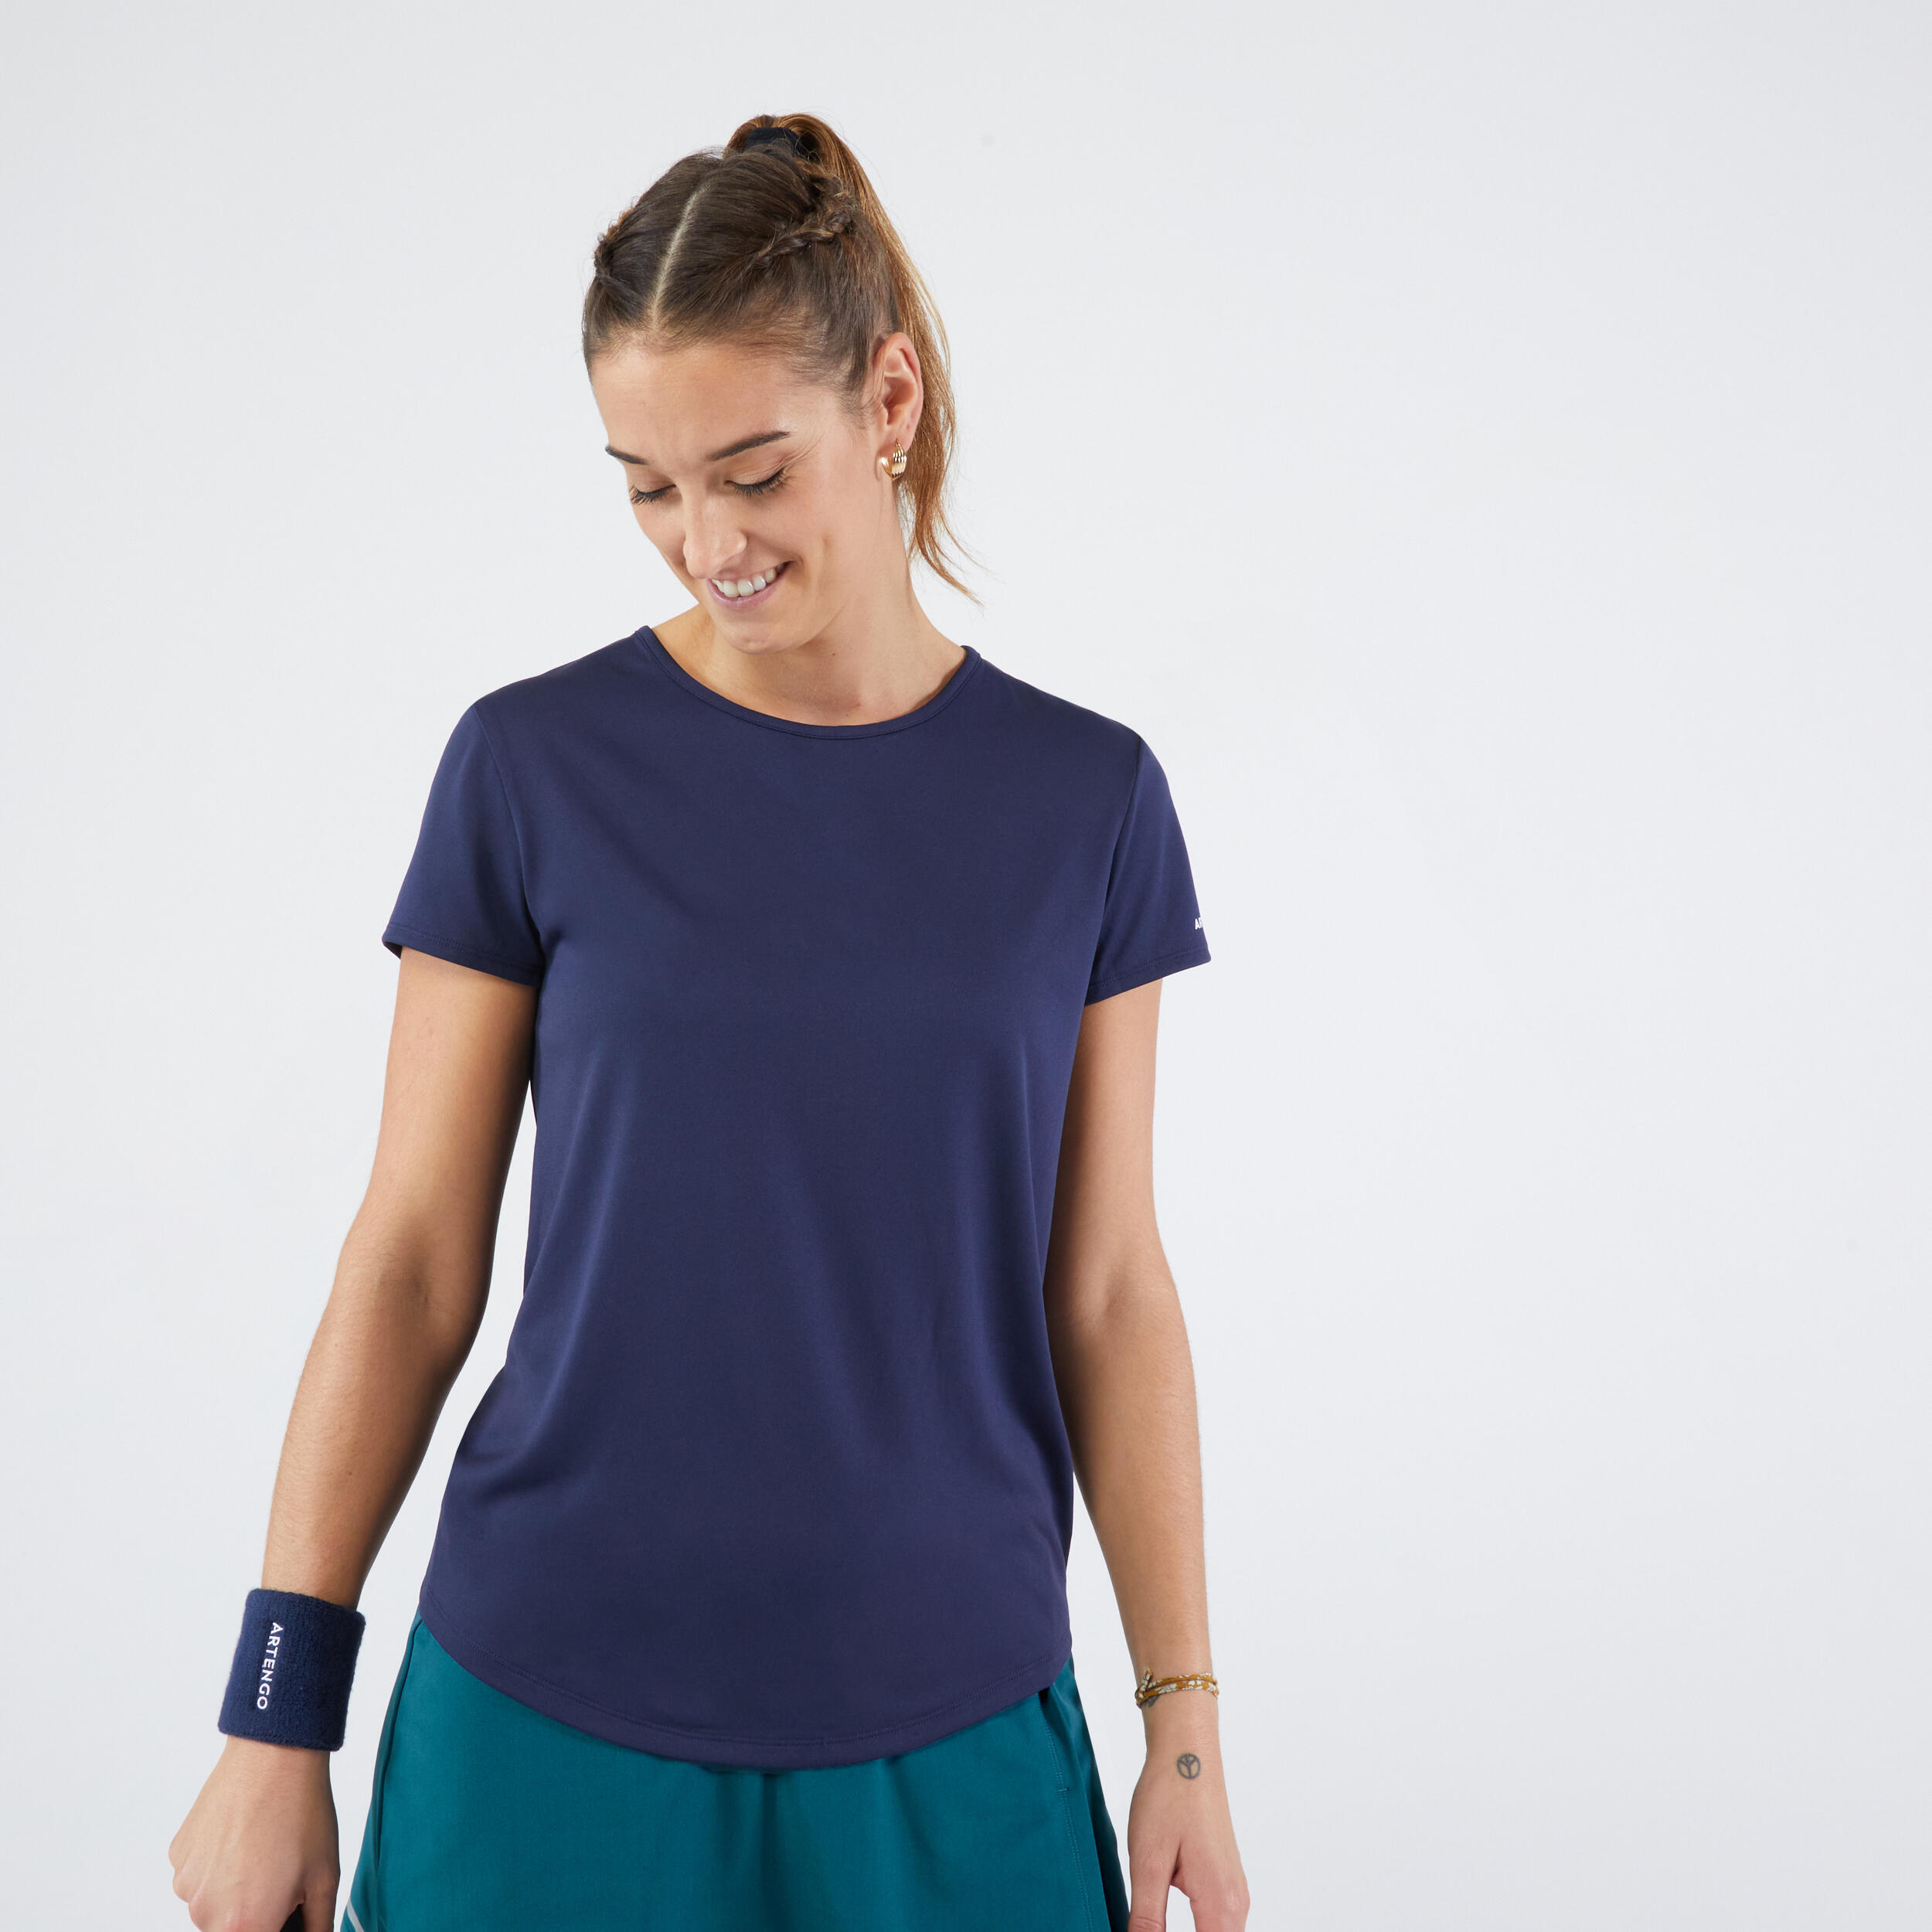 Refurbished Womens Tennis Quick-Dry Crew Neck T-Shirt Essential 100 - A Grade 3/7